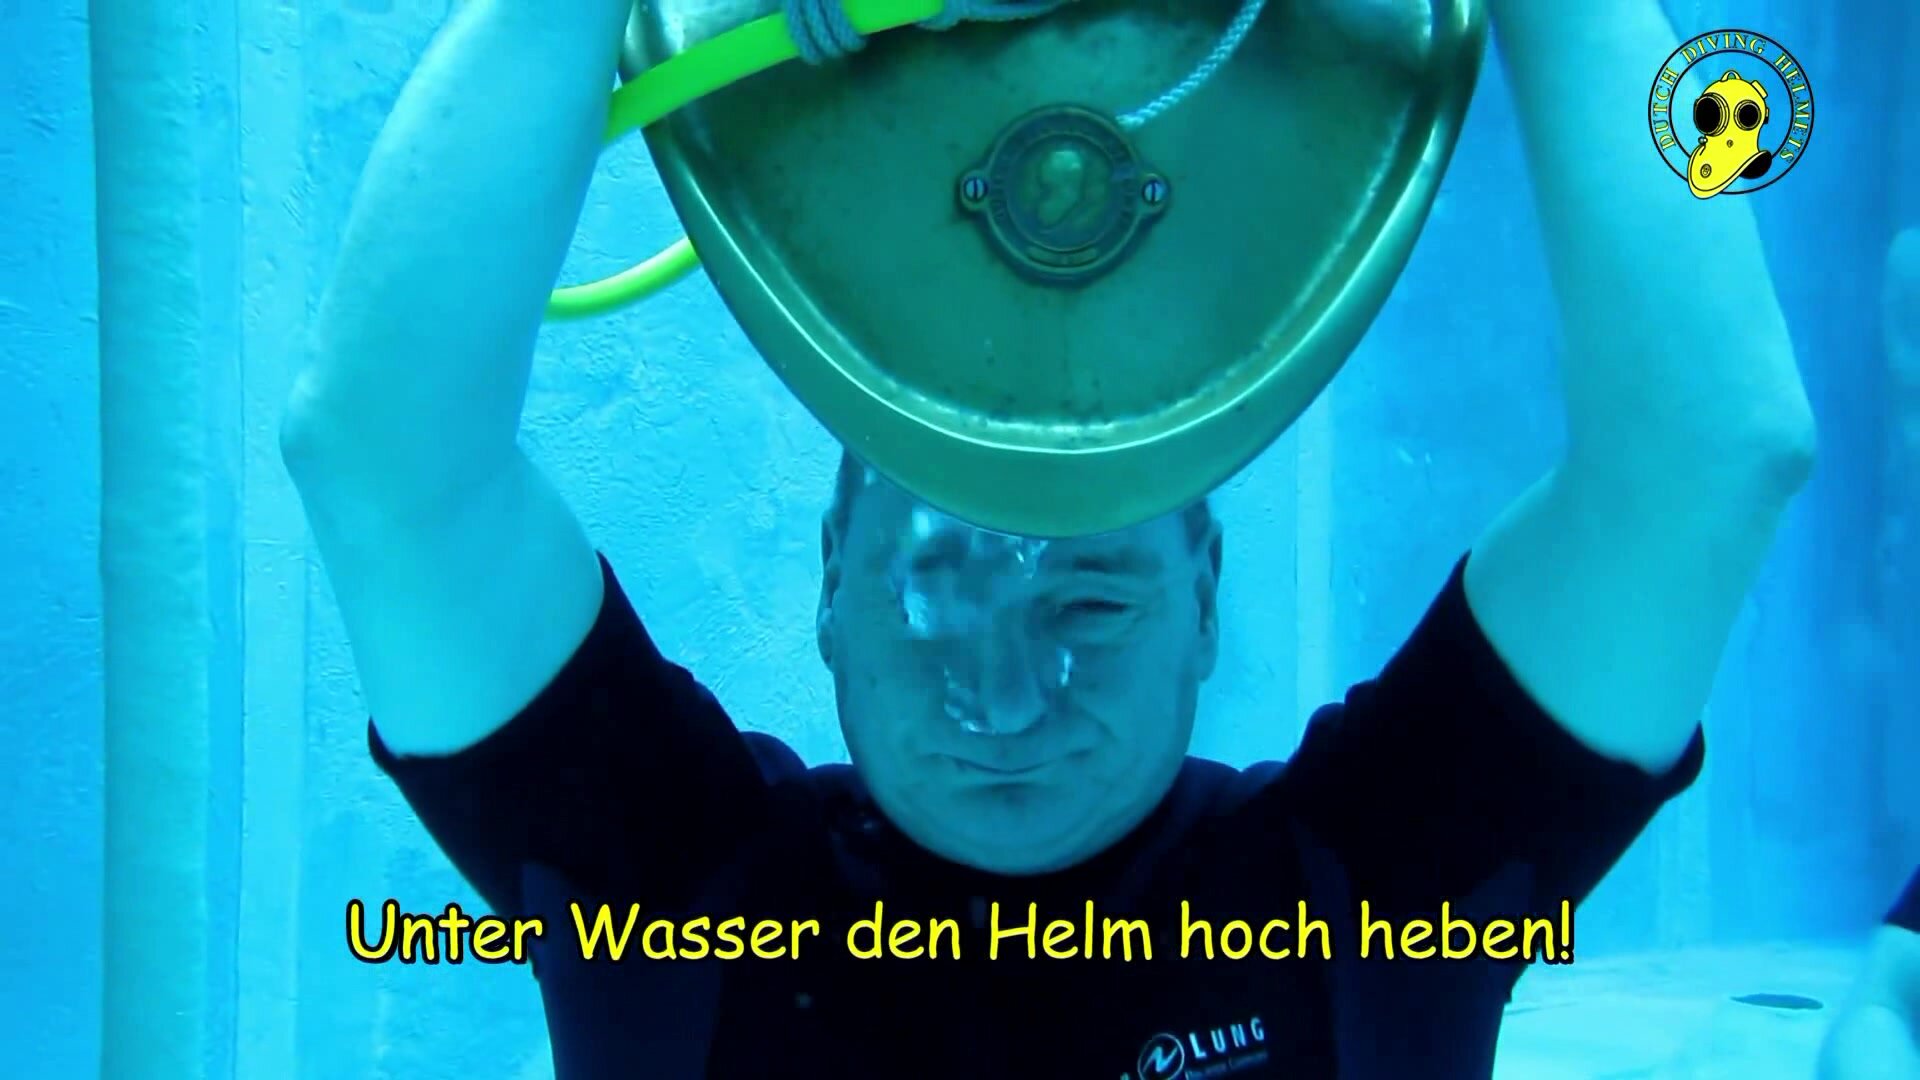 Helmet divers barefaced underwater